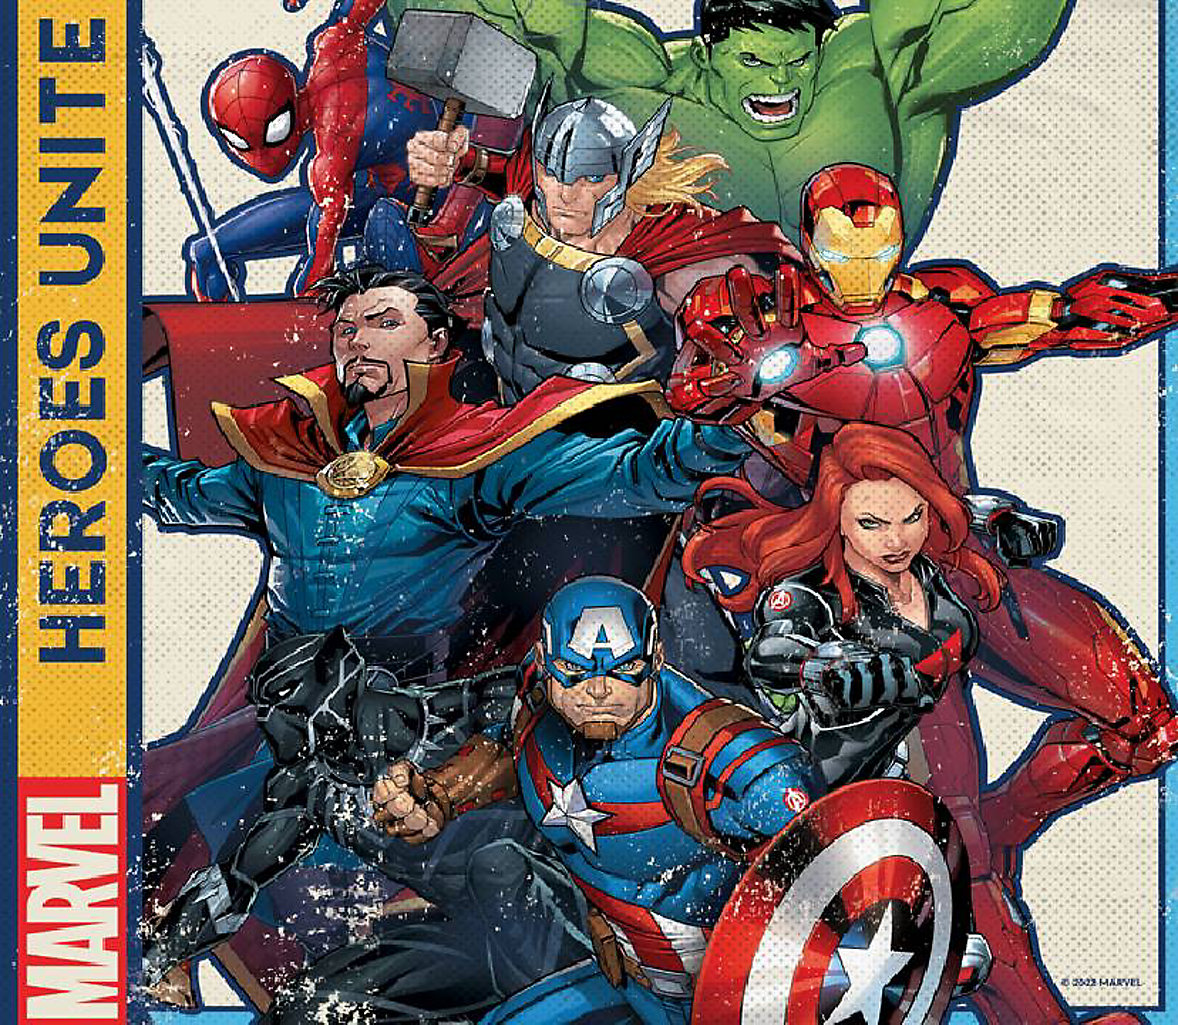 Marvel's Heroes Unite at BIG W